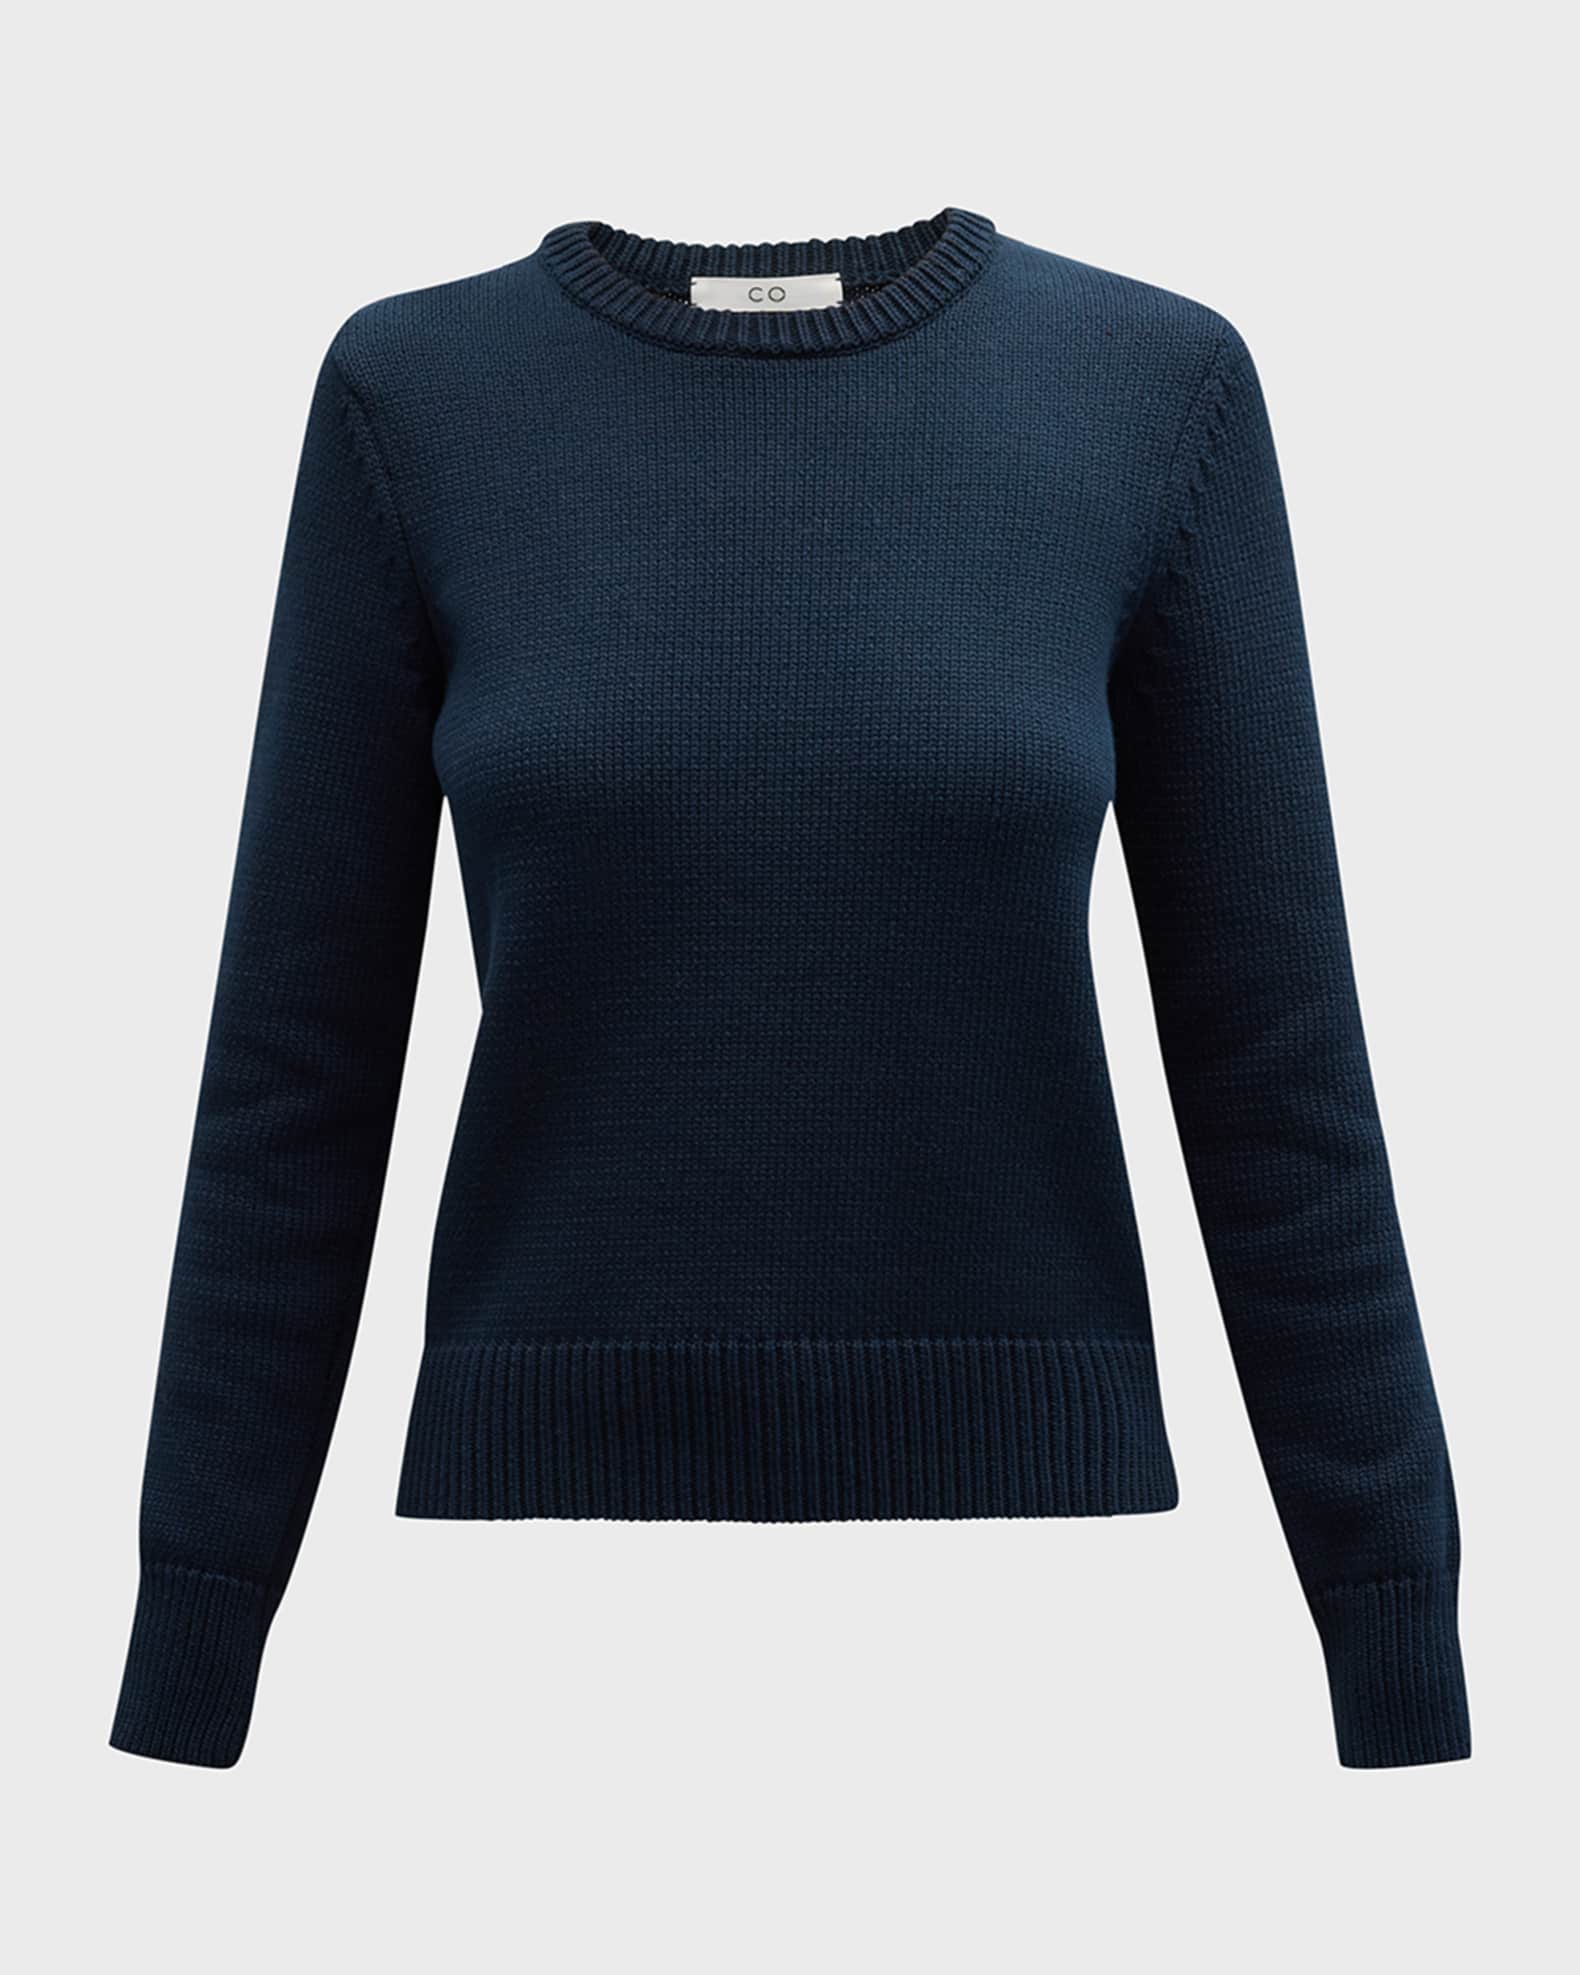 Co Crewneck Cotton-Blend Sweater | Neiman Marcus